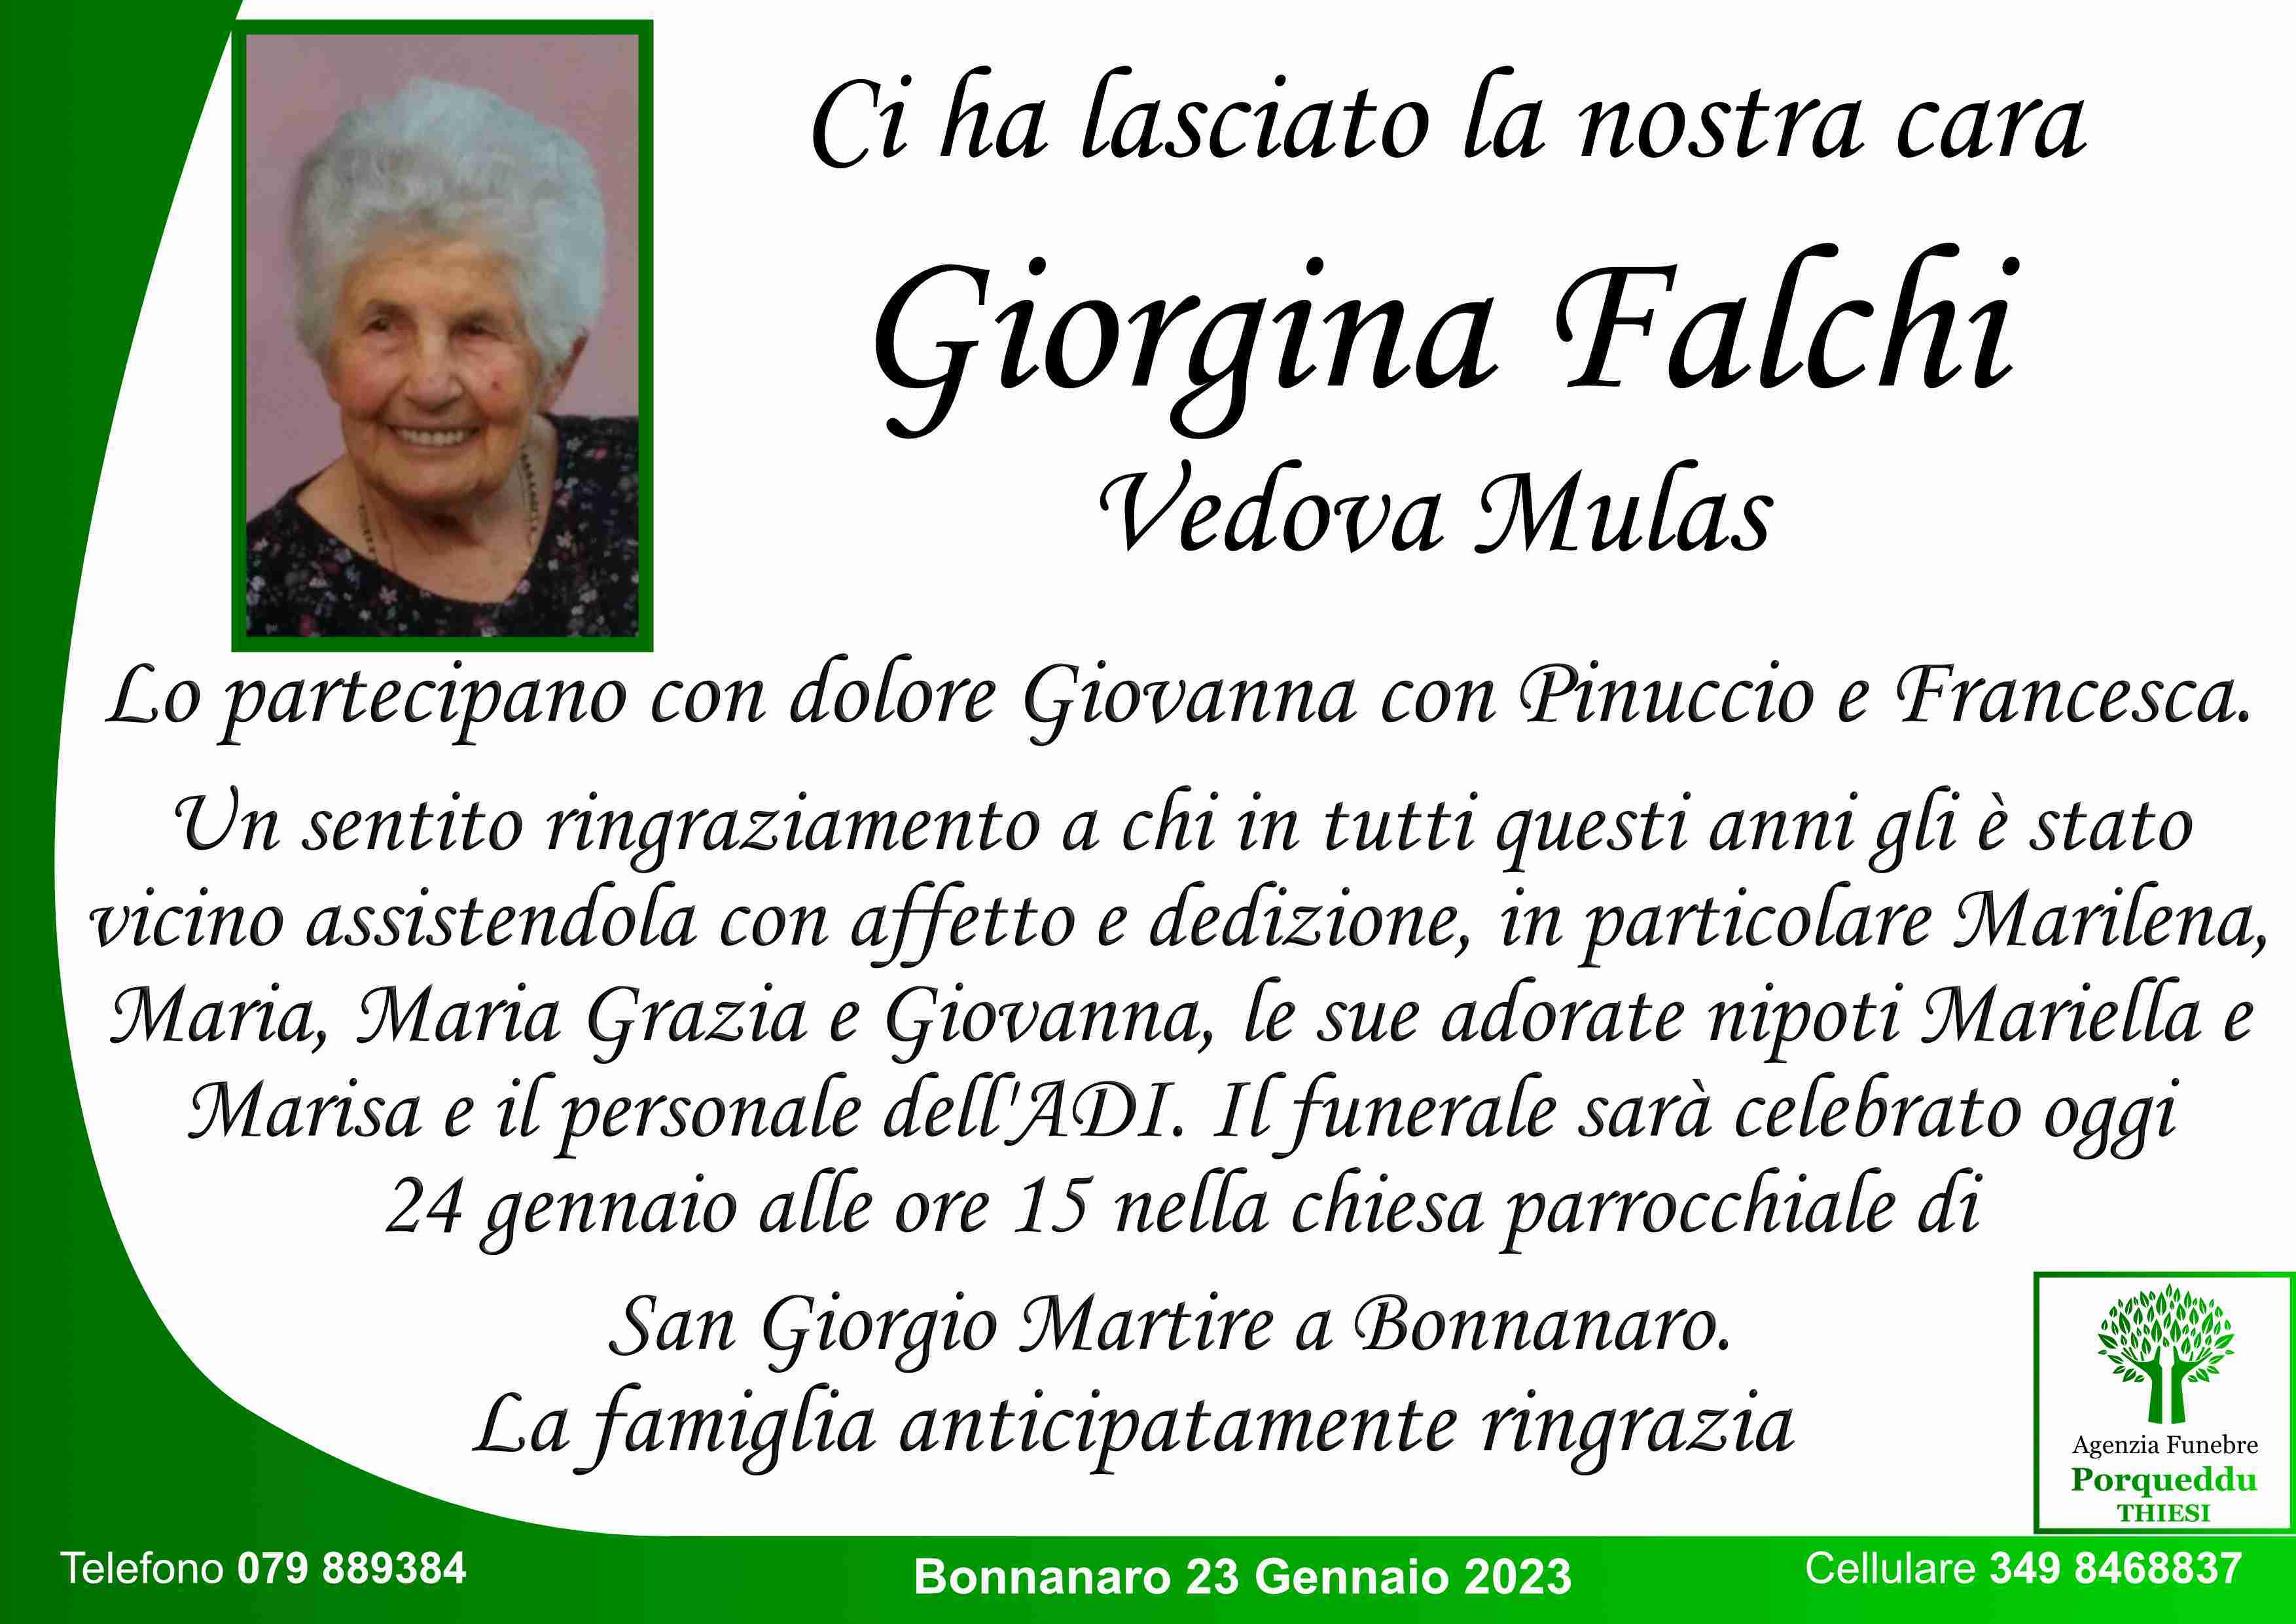 Giorgia Falchi